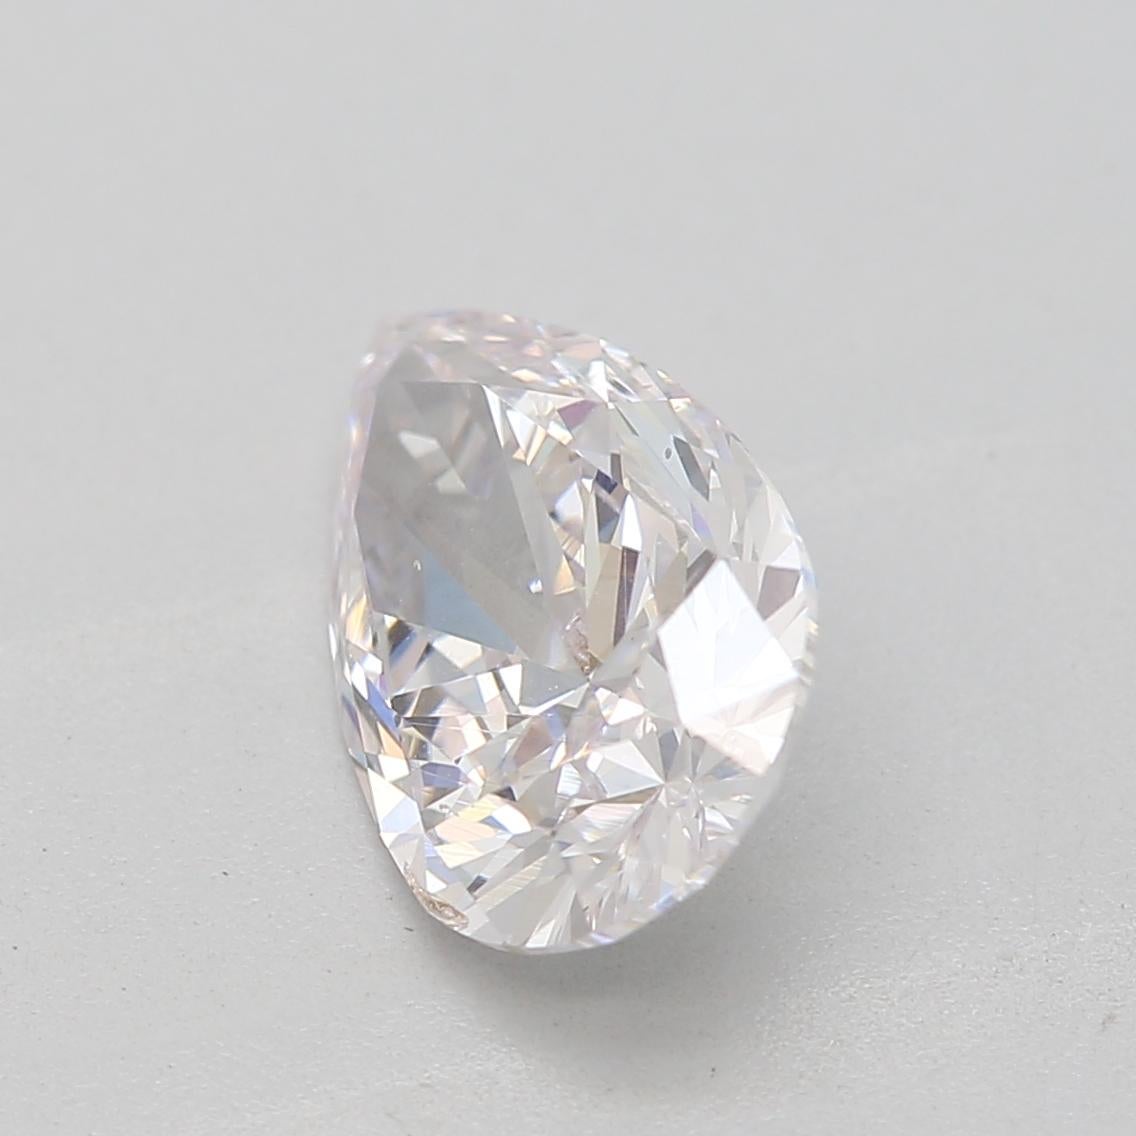 *100% NATURAL FANCY COLOUR DIAMOND*

✪ Diamond Details ✪

➛ Shape: Pear
➛ Colour Grade: Faint Pink 
➛ Carat: 1.02
➛ Clarity: SI1
➛ GIA Certified 

^FEATURES OF THE DIAMOND^












Also, our GIA certified diamond is a diamond that has undergone